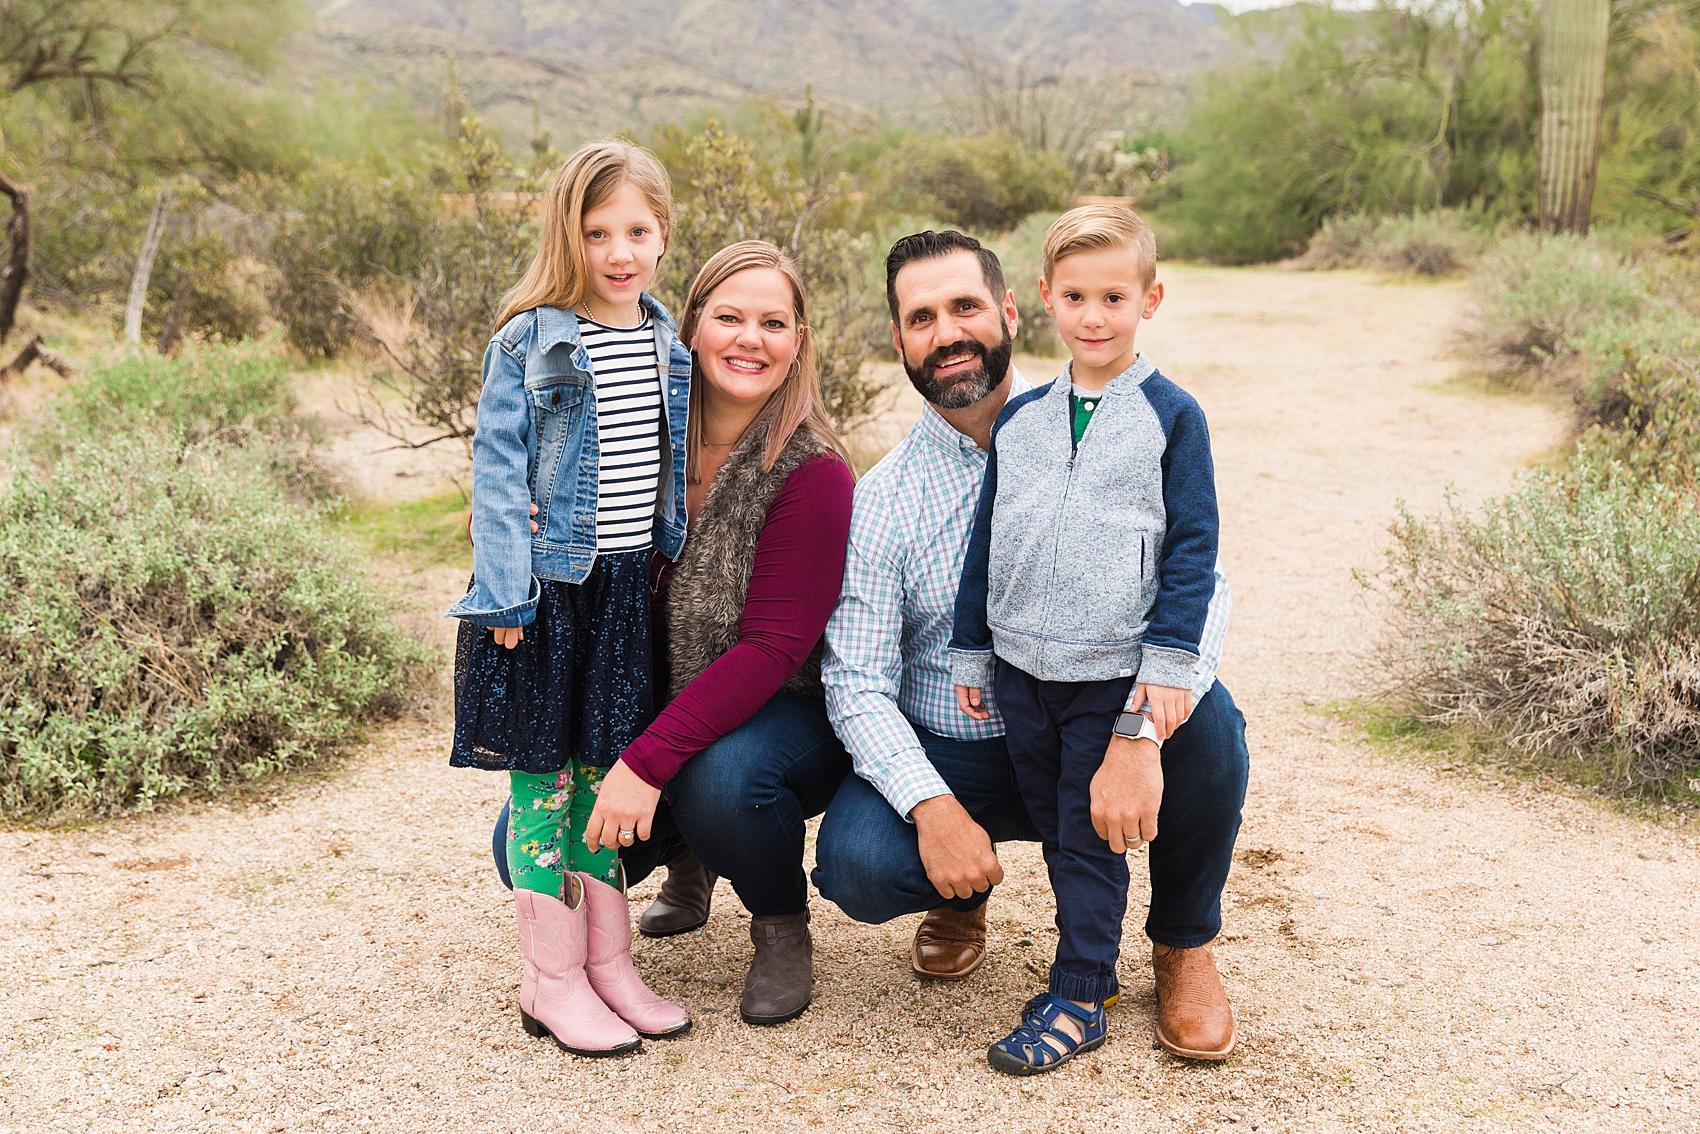 Leah Hope Photography | Scottsdale Phoenix Arizona | Family Pictures Photographer | Extended Family Photos | Grandparents | Multi-generational | Desert Landscape Cactus Scenery